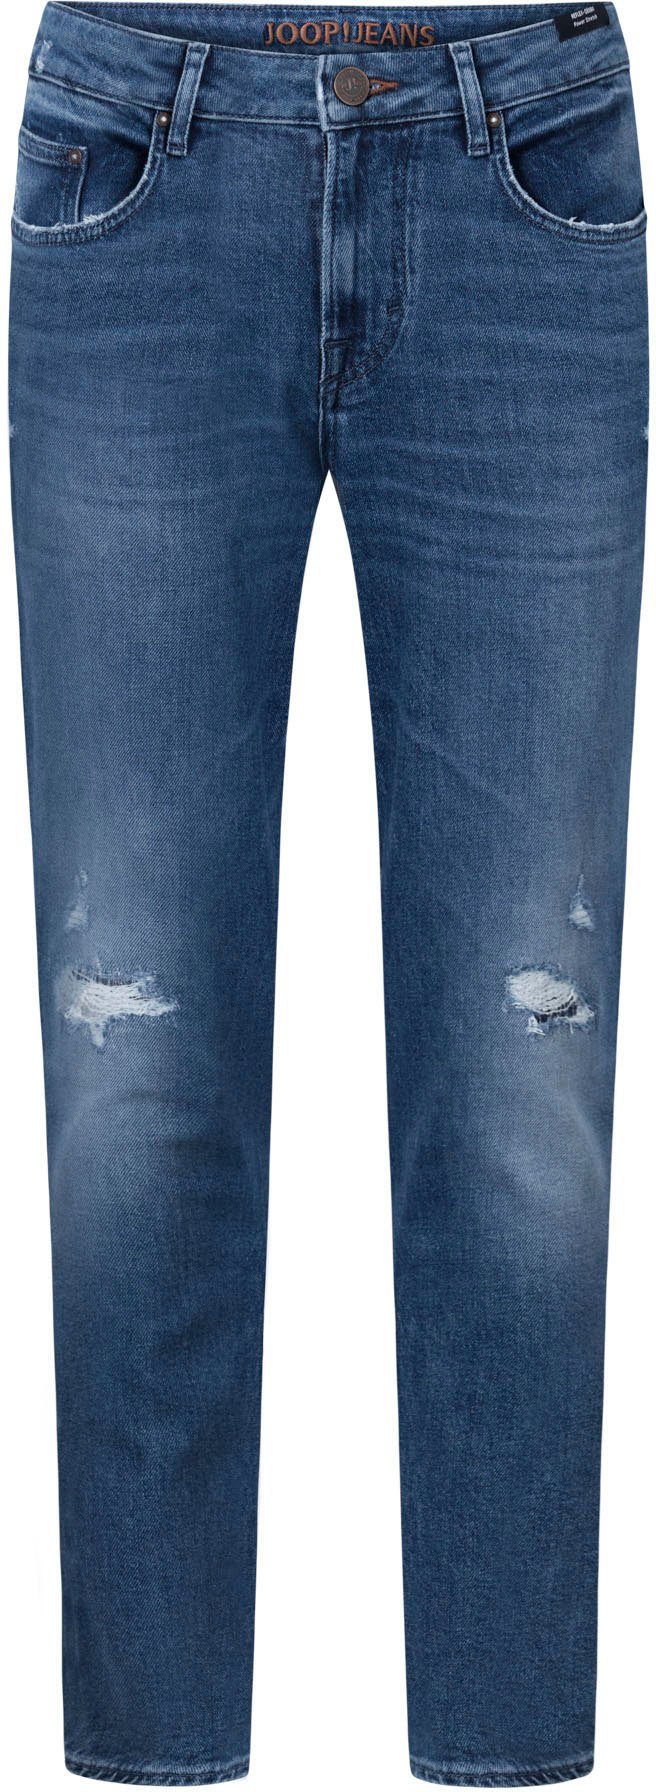 Straight-Jeans 5-Pocket Joop Form Jeans in